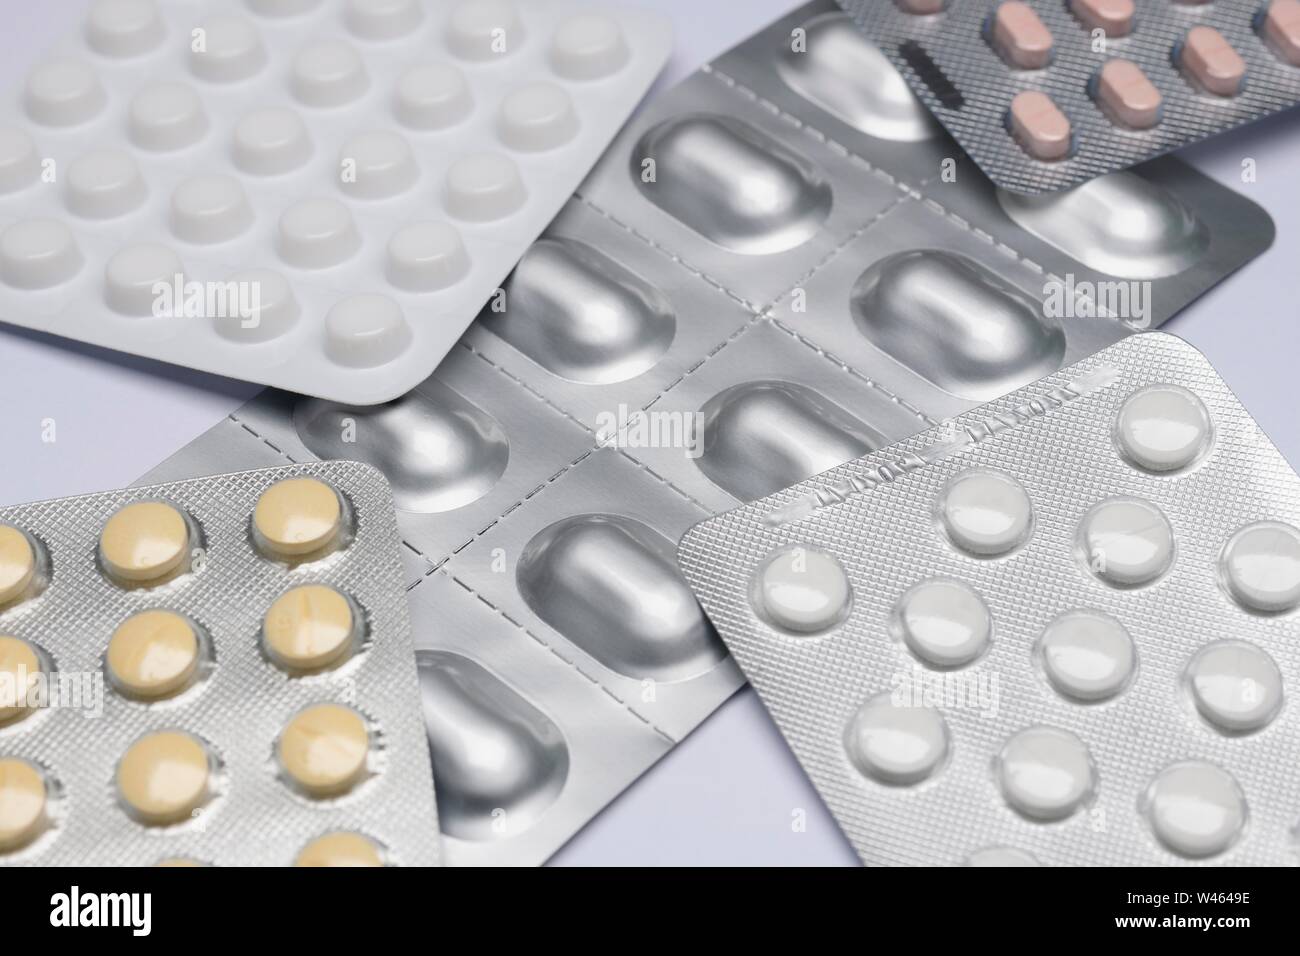 Verschiedene Tabletten im Blister Verpackung, Deutschland Stockfotografie -  Alamy